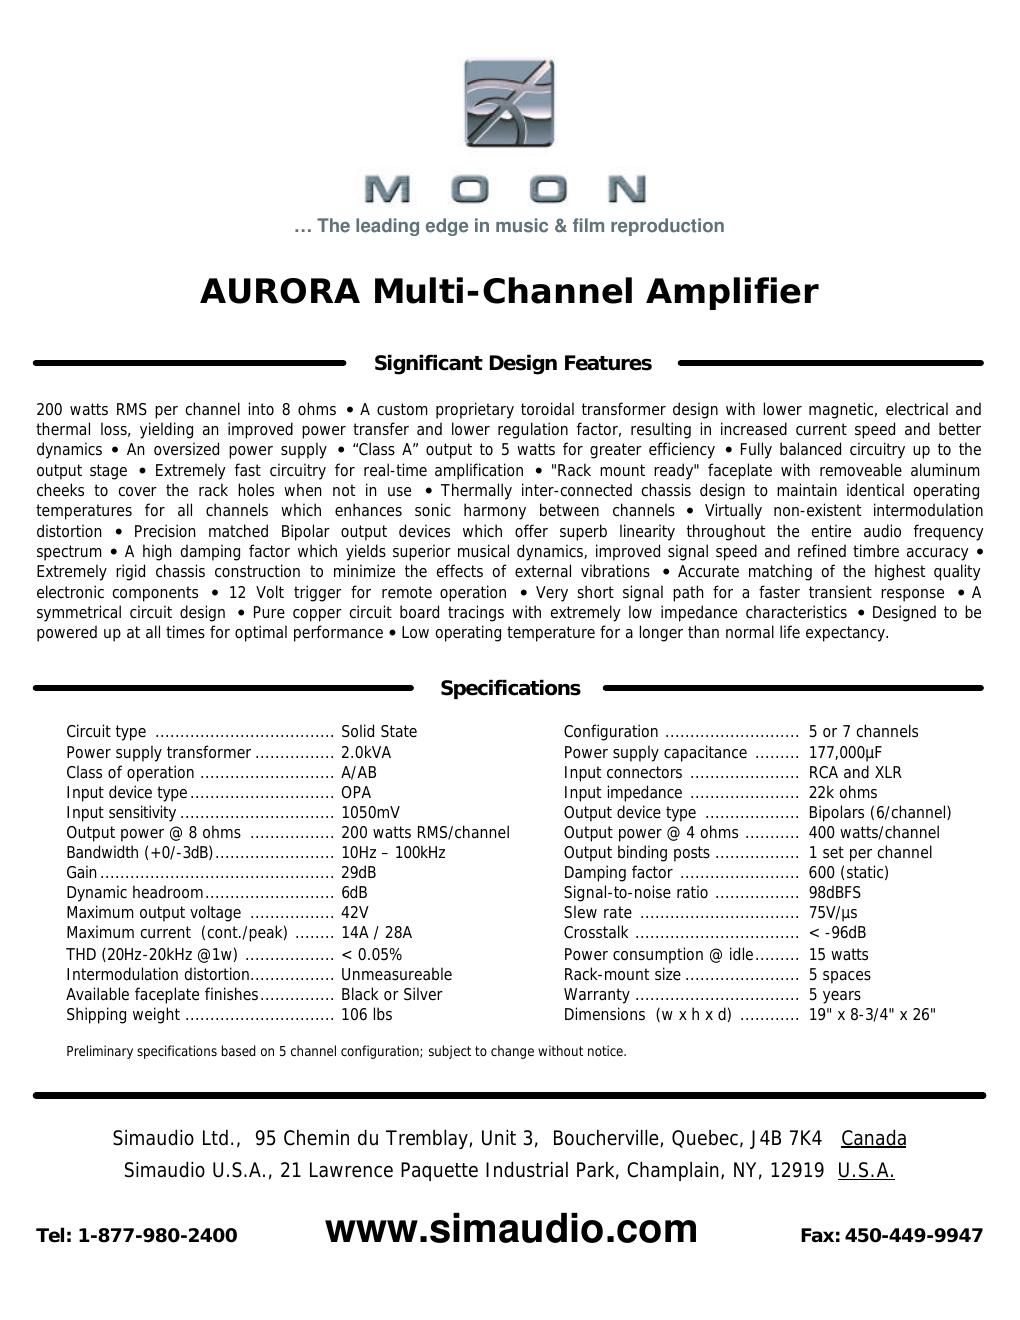 moon aurora brochure